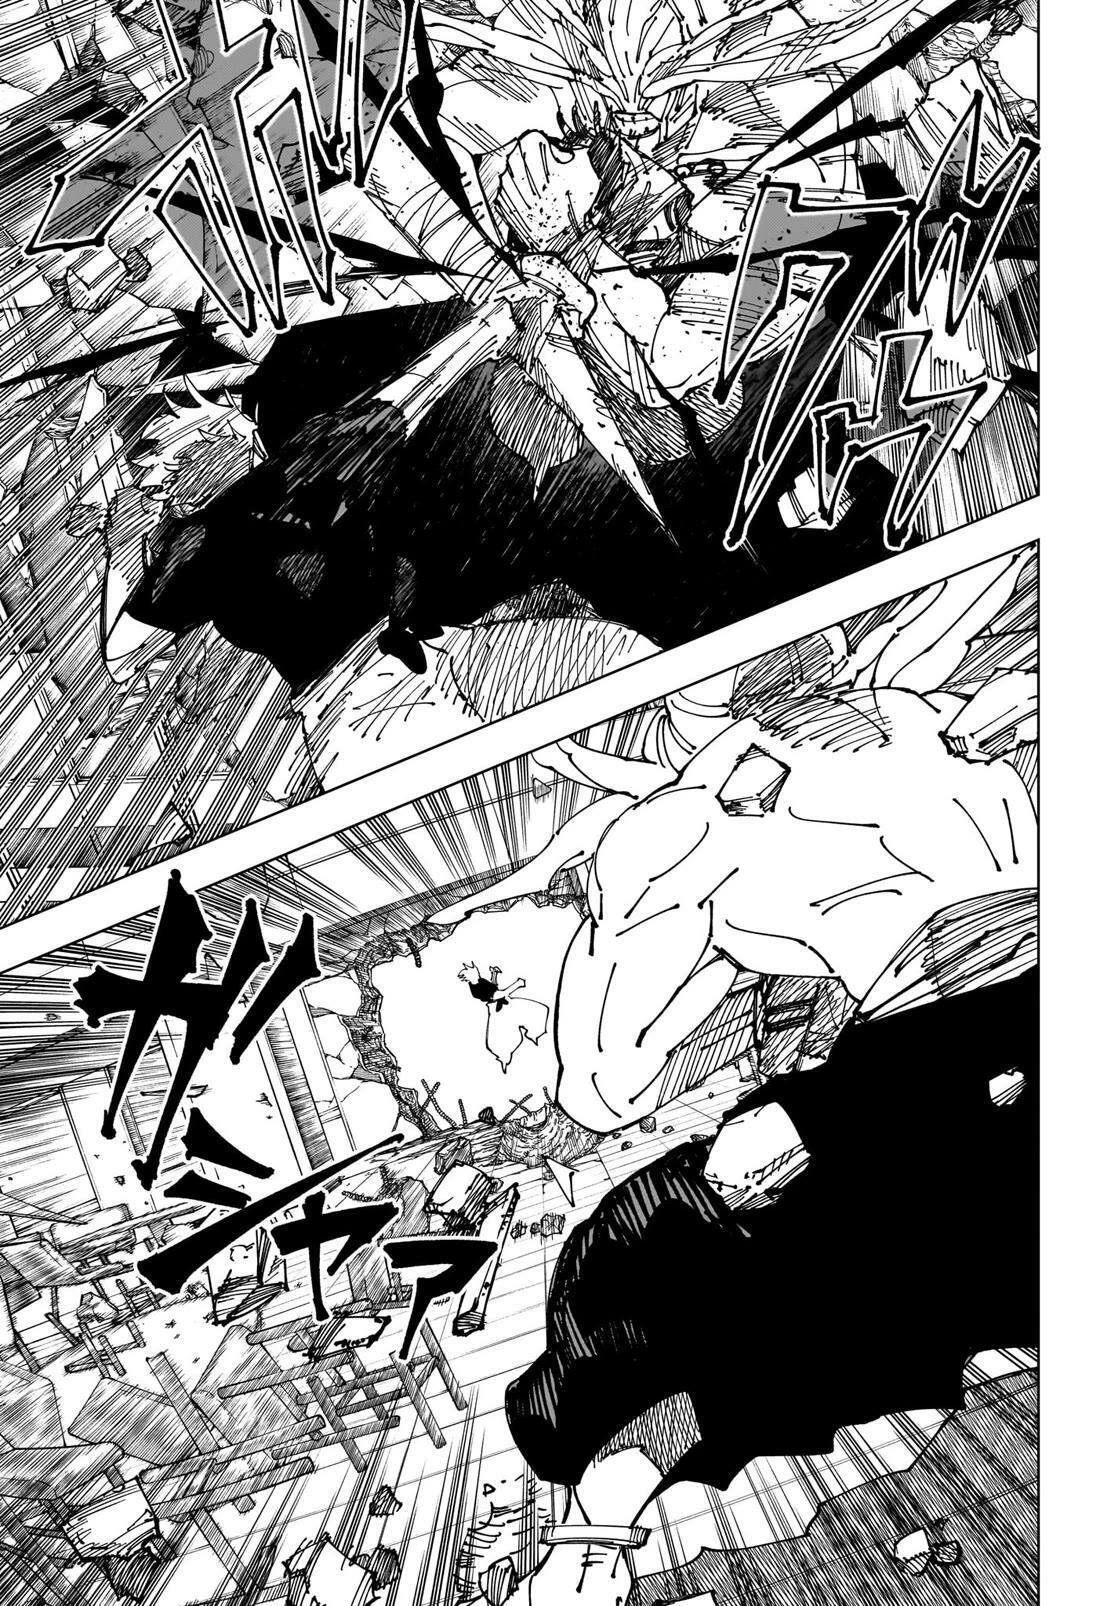 Jujutsu Kaisen Chapter 235: The Decisive Battle In The Uninhabited, Demon-Infested Shinjuku ⑬ page 6 - Mangakakalot